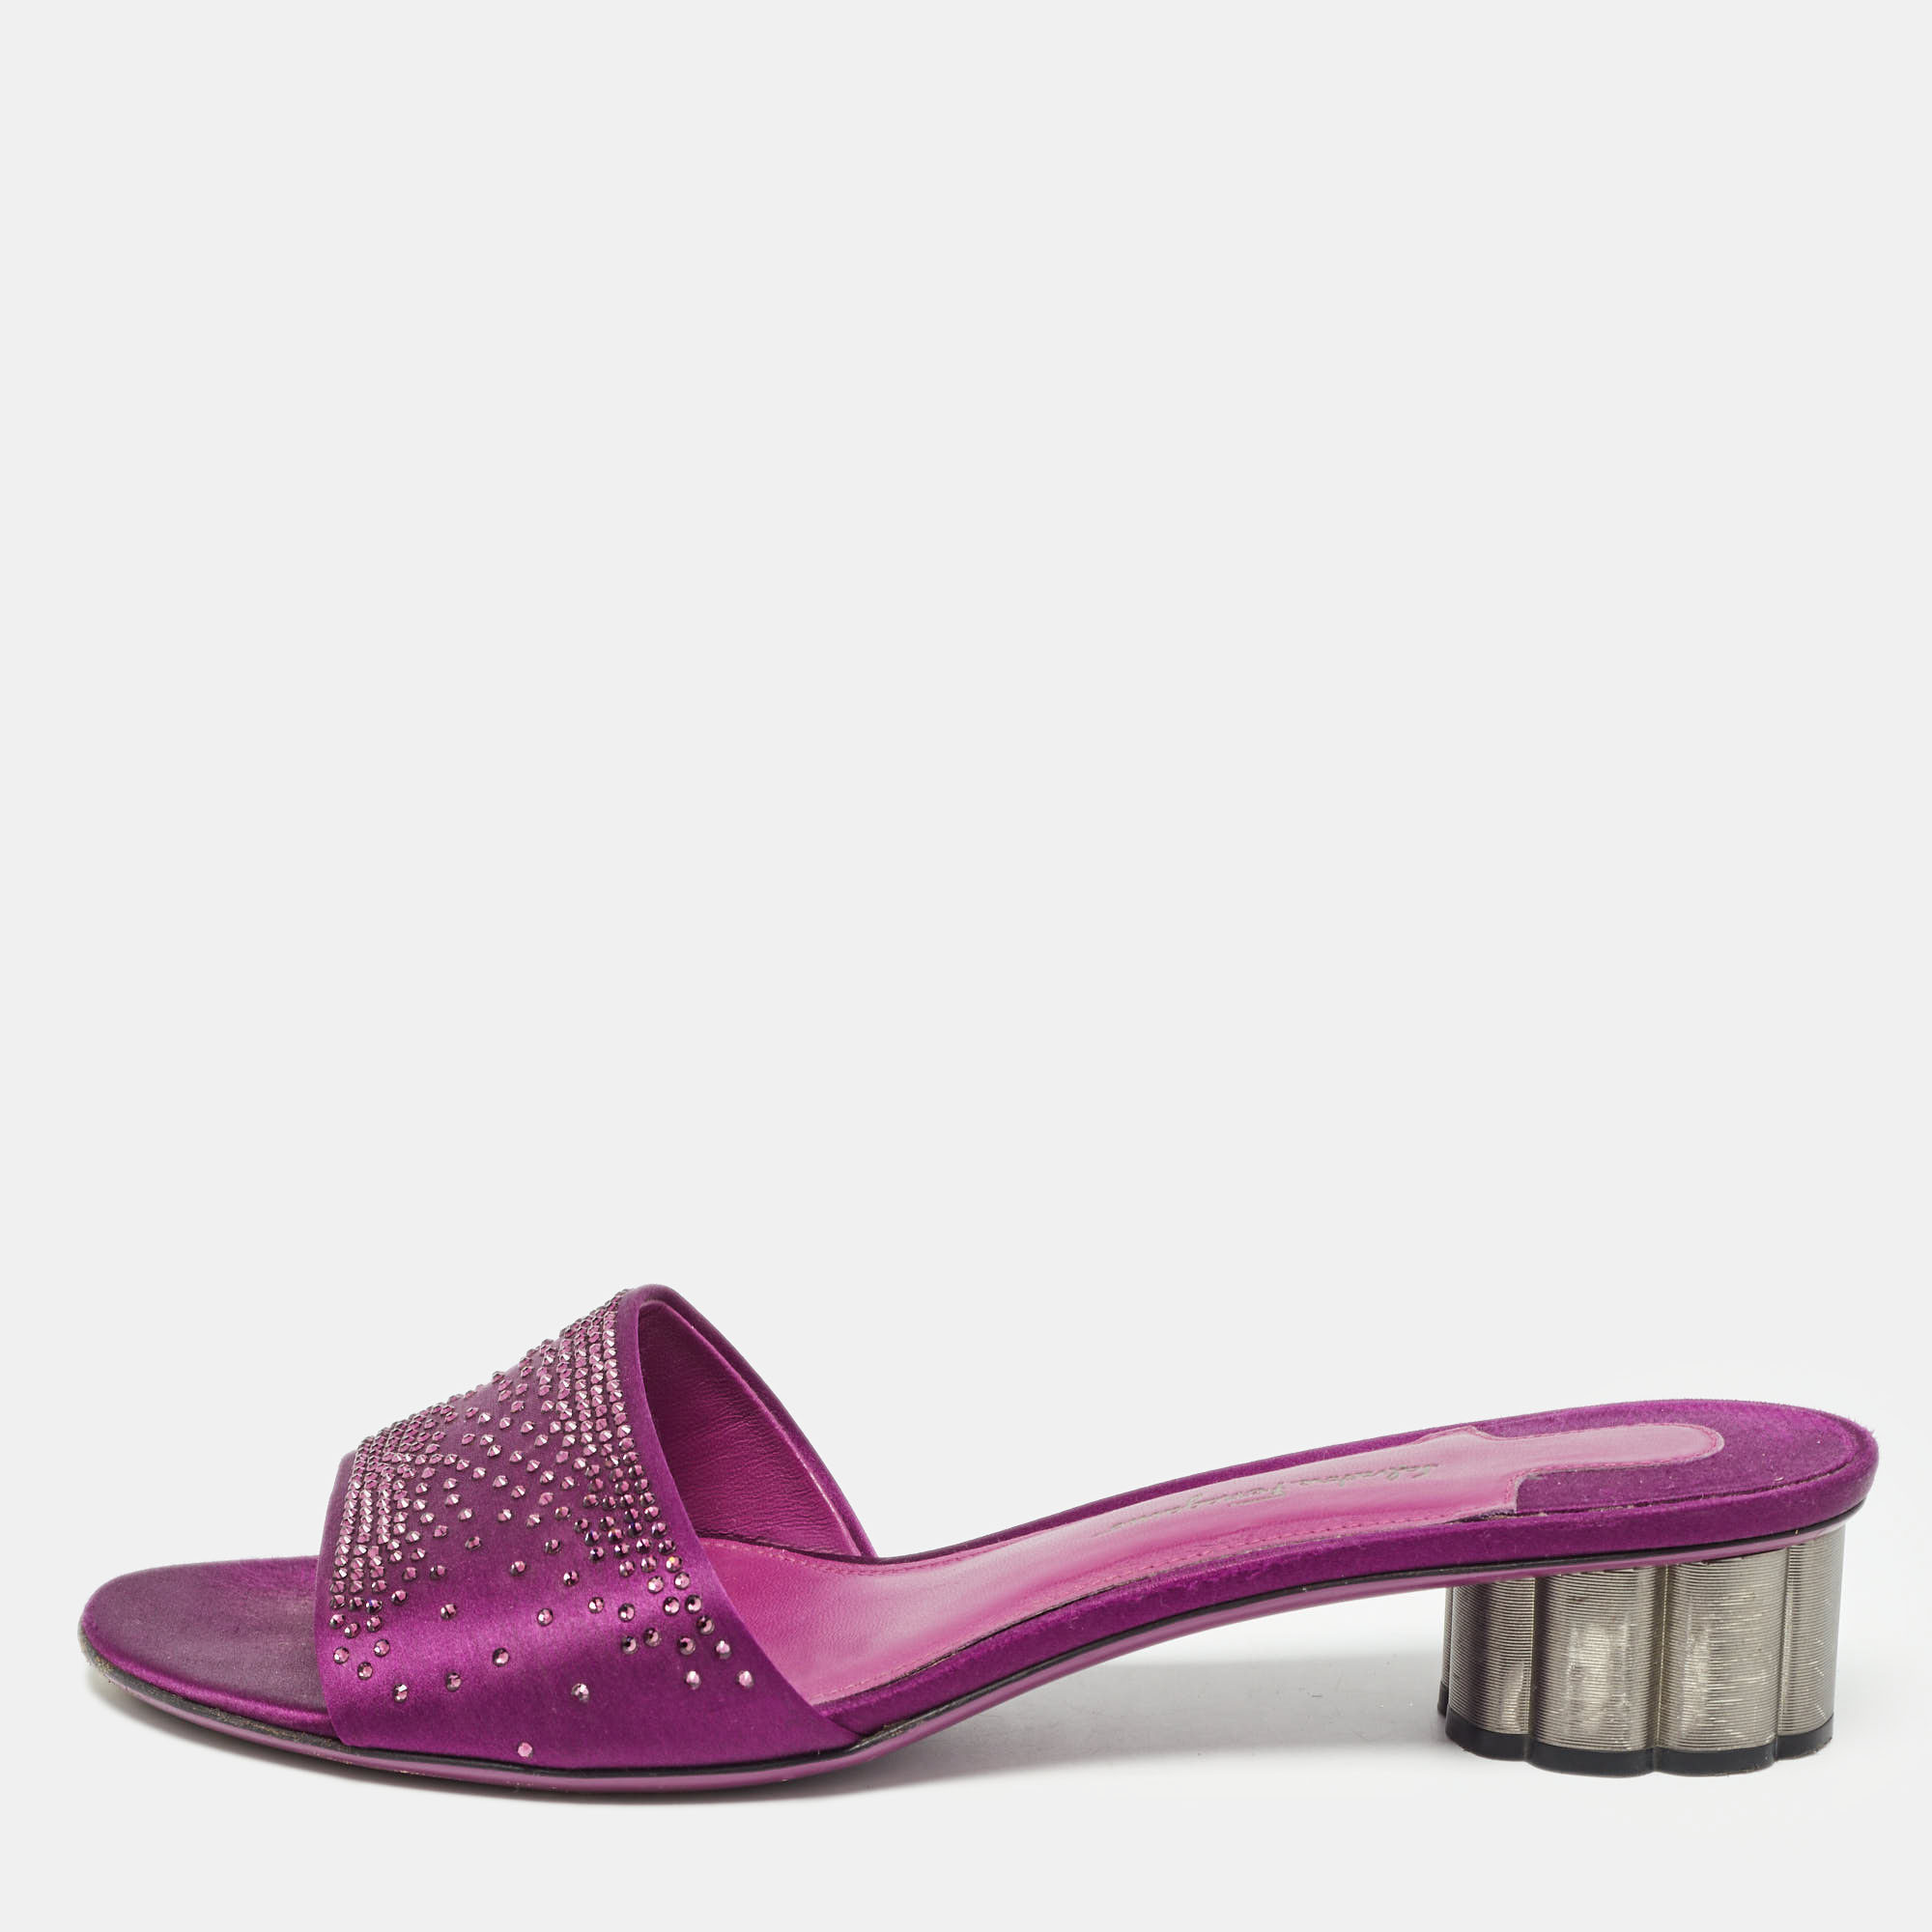 Salvatore ferragamo purple satin gorizias sandals size 40